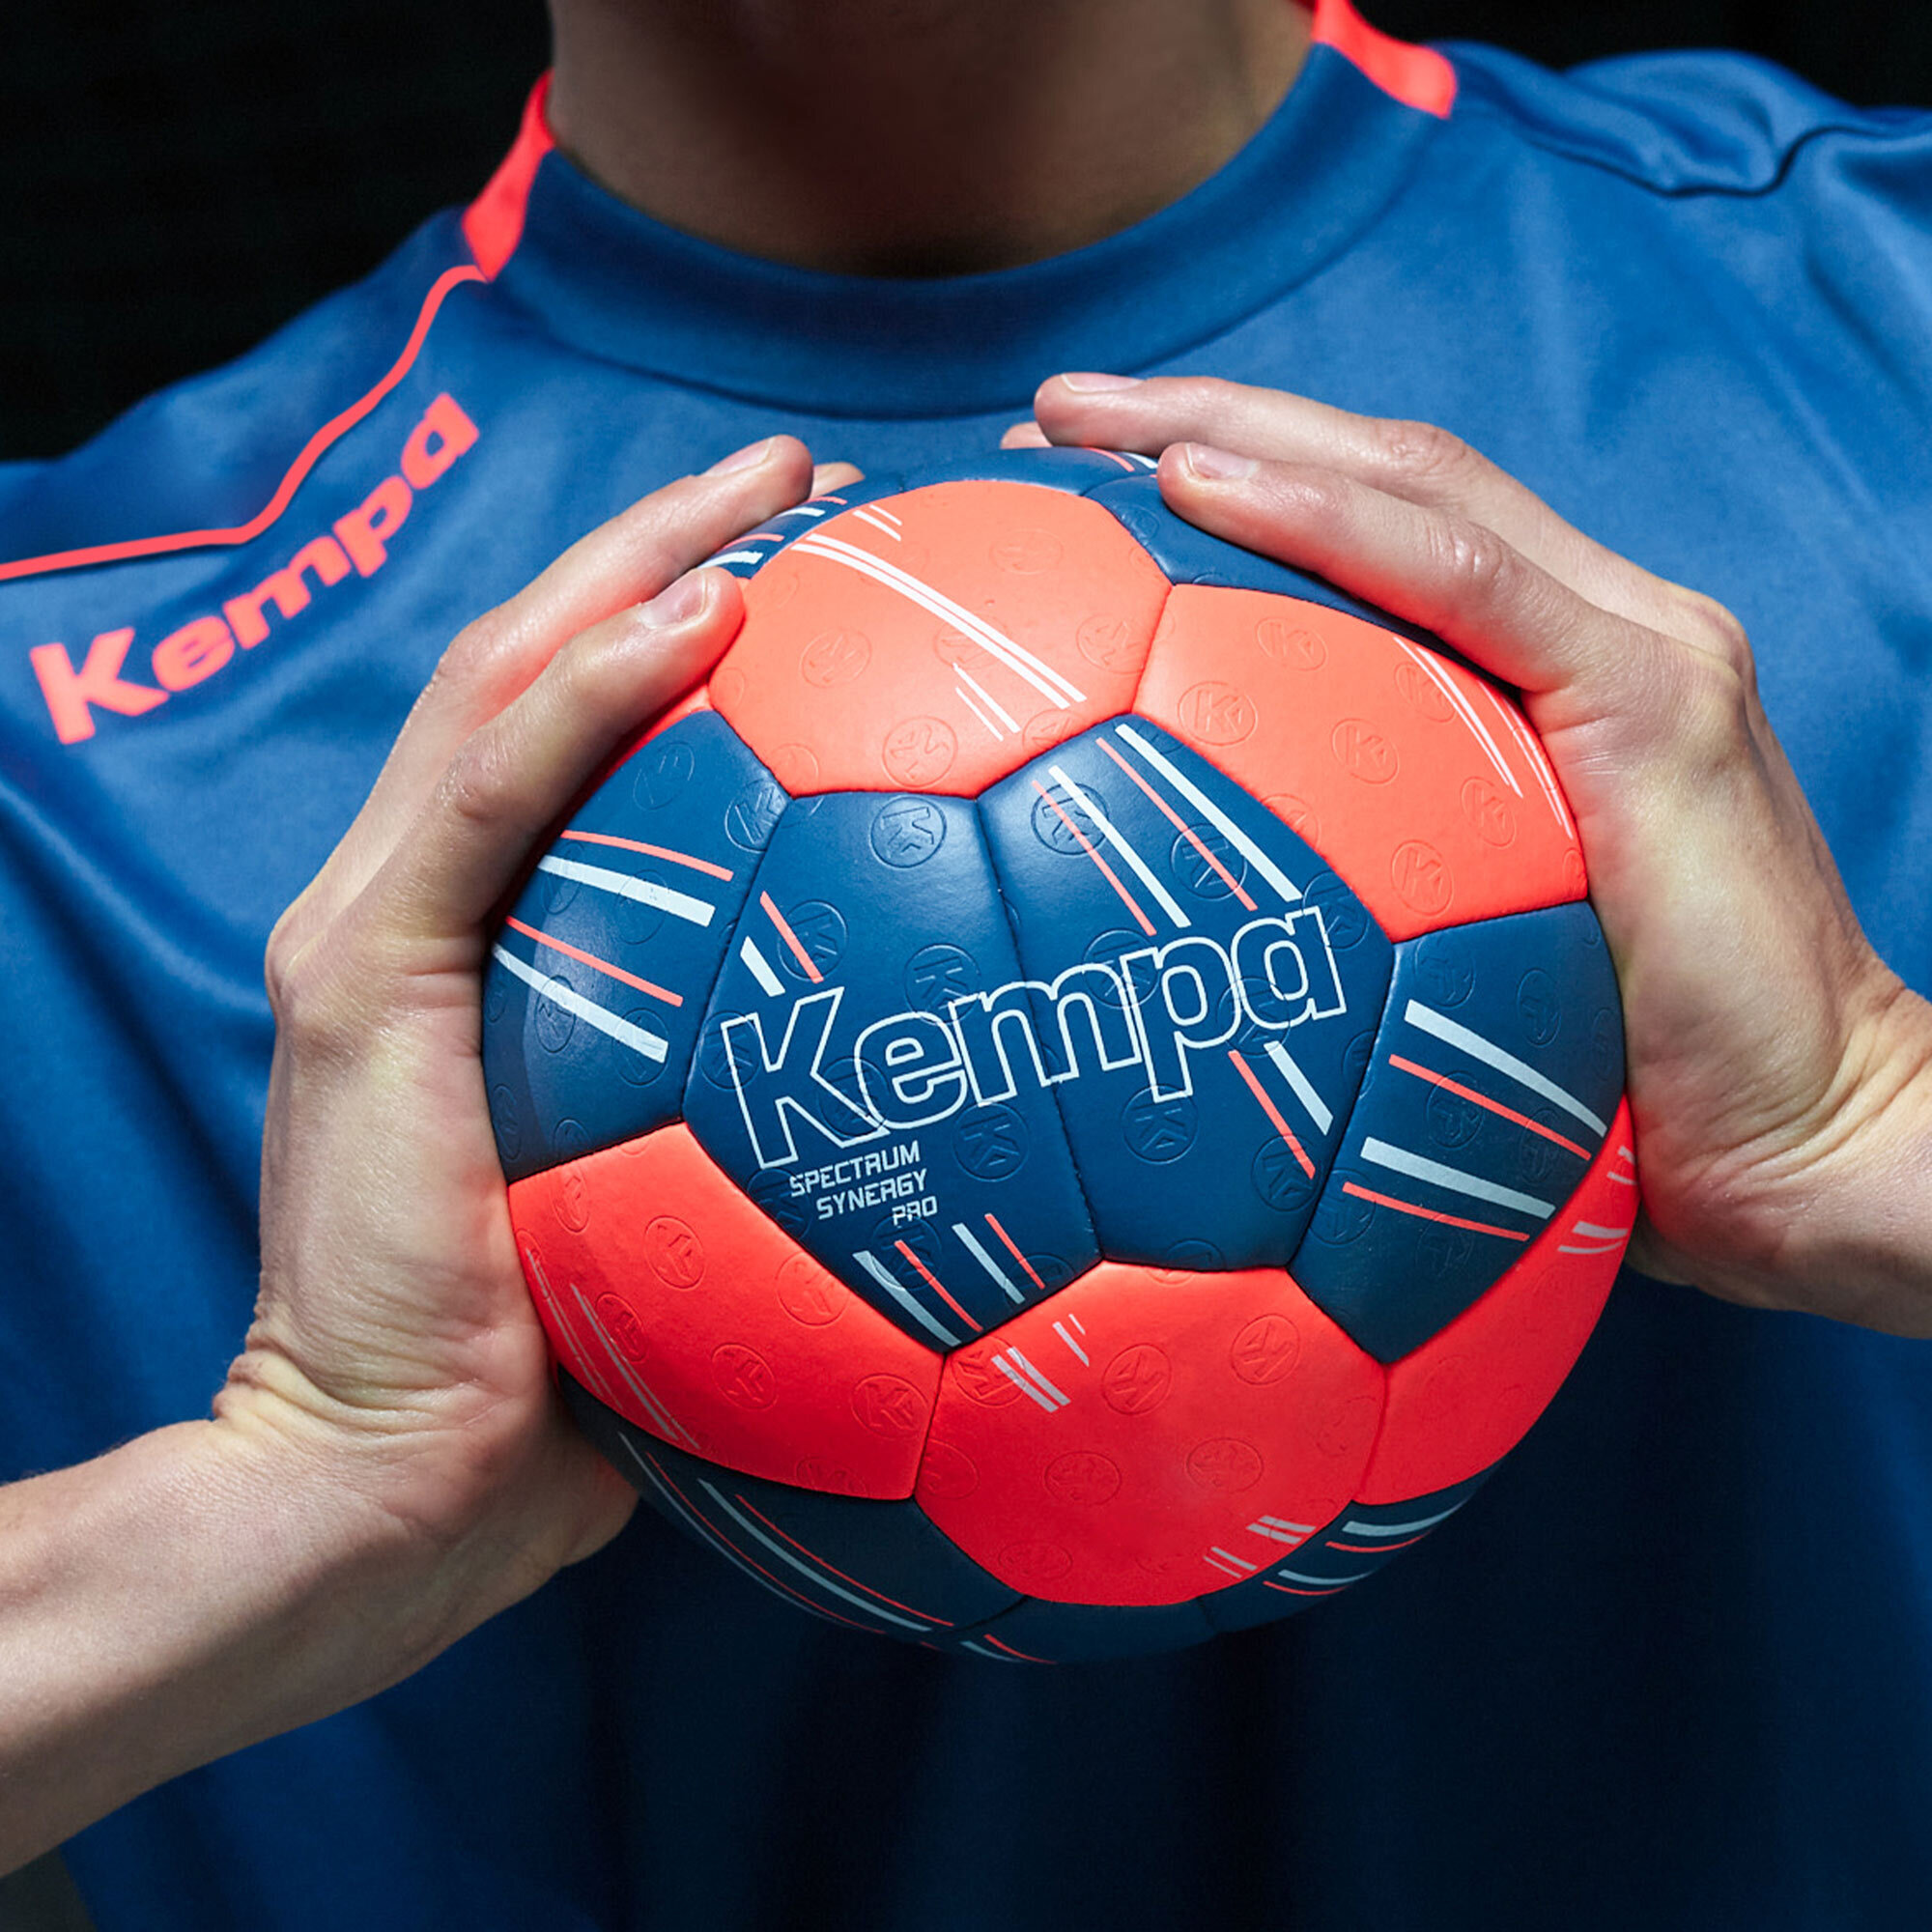 Kempa Spectrum Synergy Pro Handball